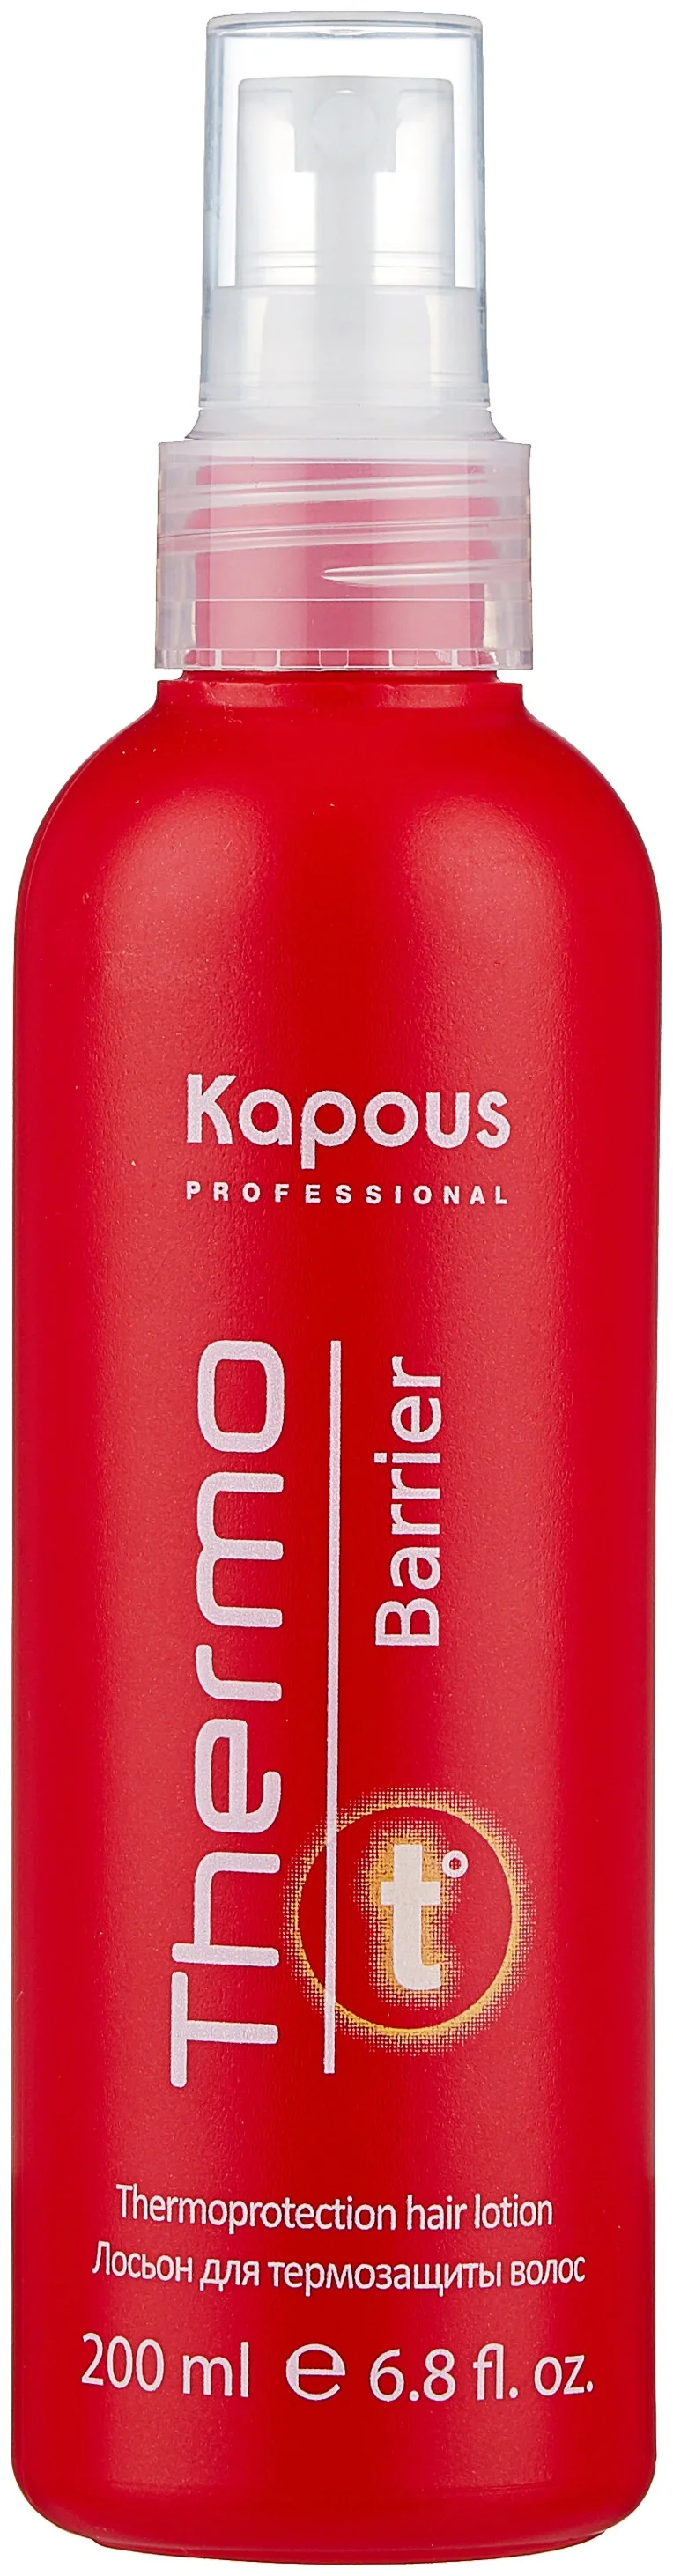 Kapous Professional лосьон для термозащиты волос Thermo Barrier - эффект: питание